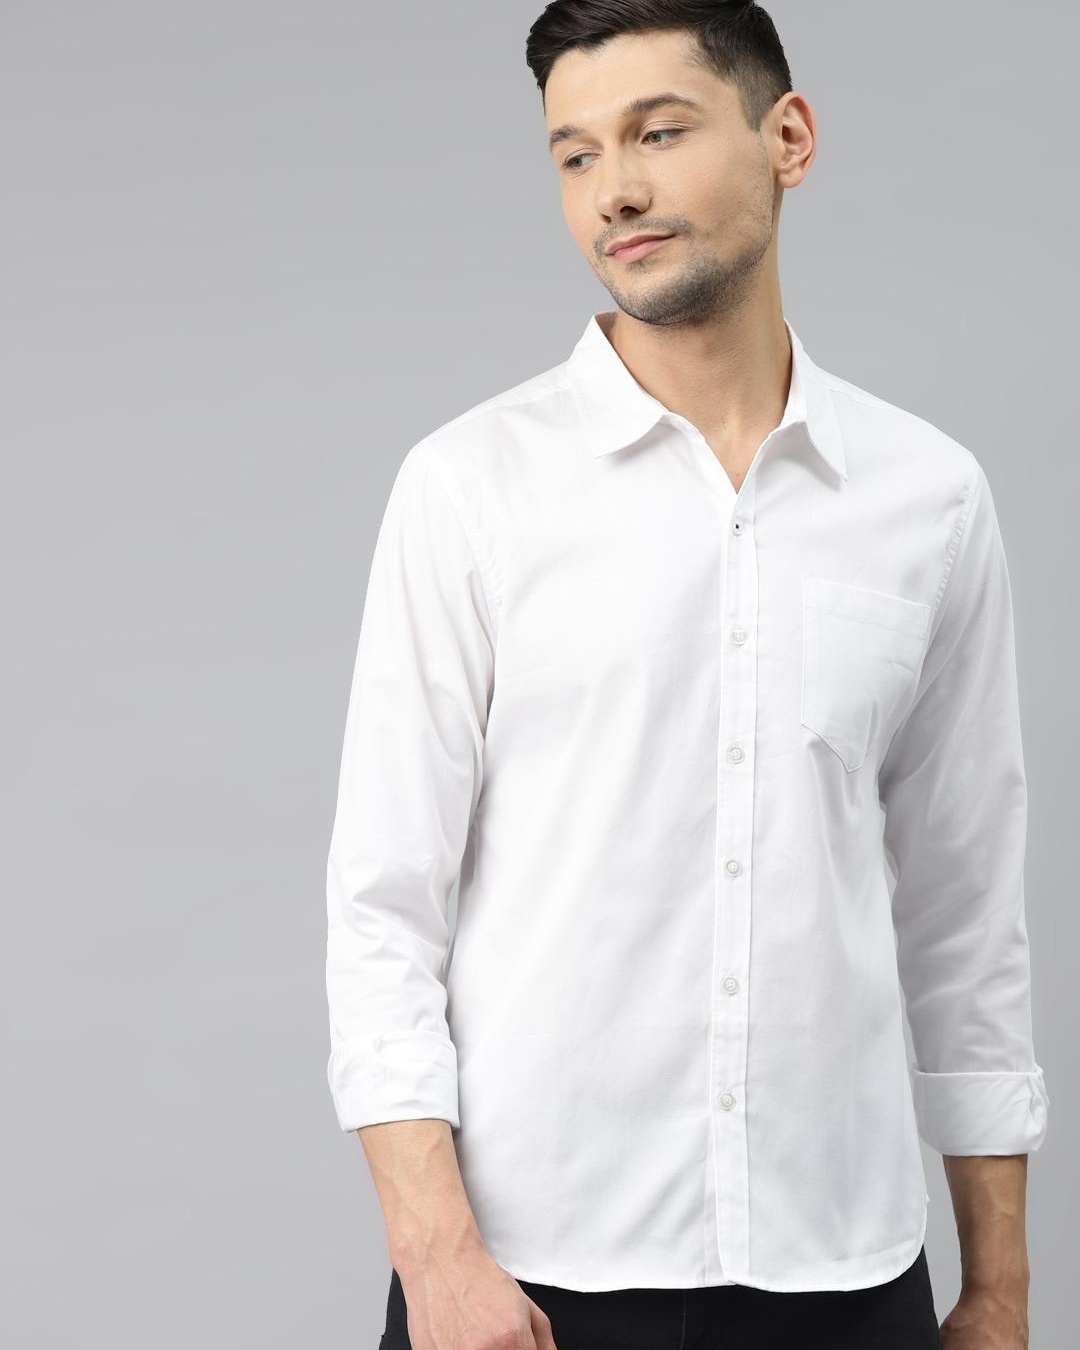 Buy Men's White Casual Shirt Online at Bewakoof